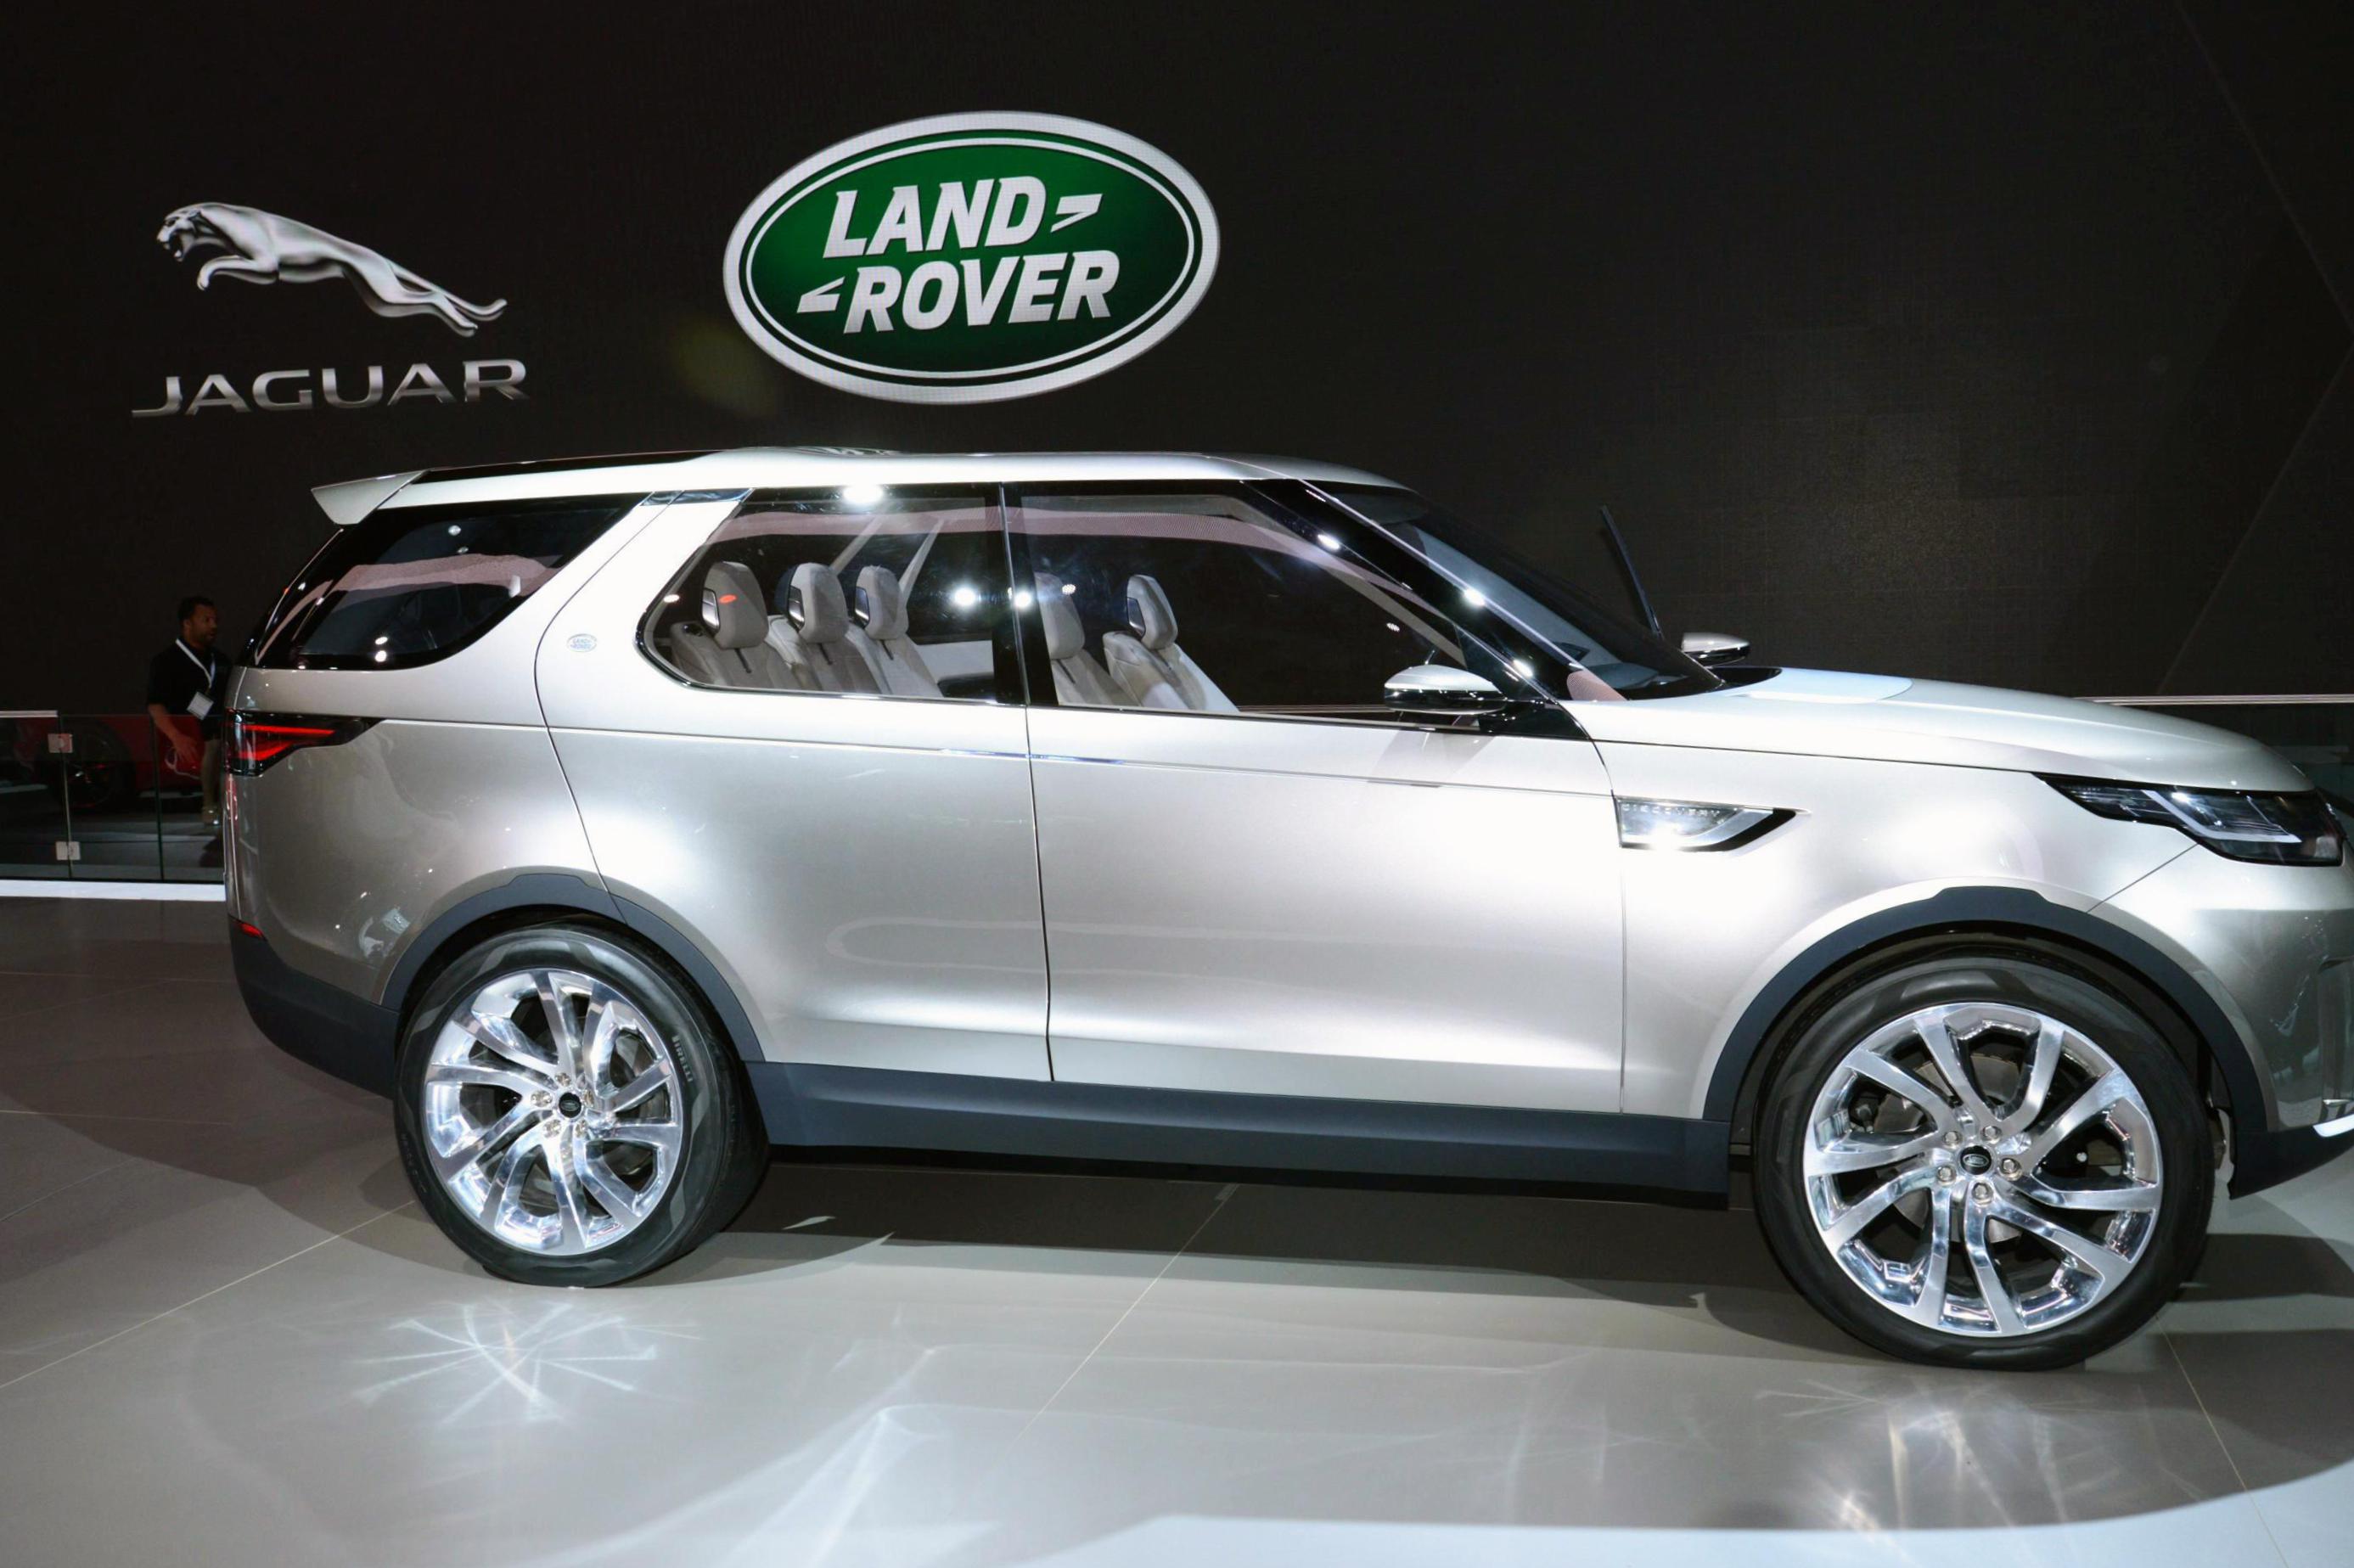 Discovery Sport Land Rover model sedan